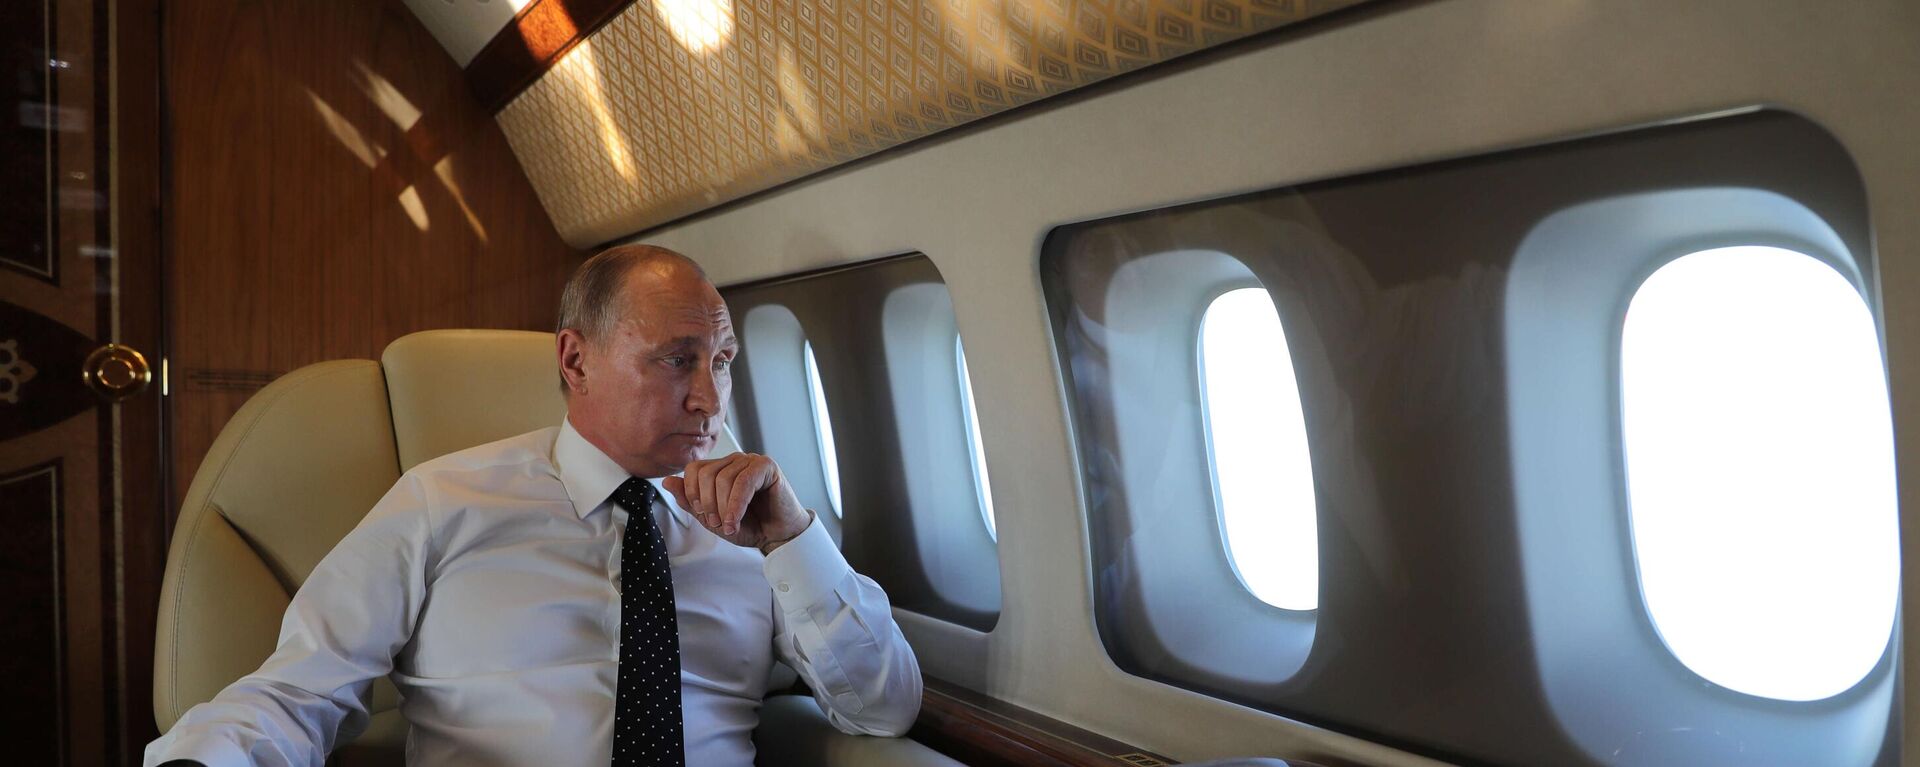 Президент РФ Владимир Путин на борту президентского самолета  - Sputnik Азербайджан, 1920, 06.12.2021